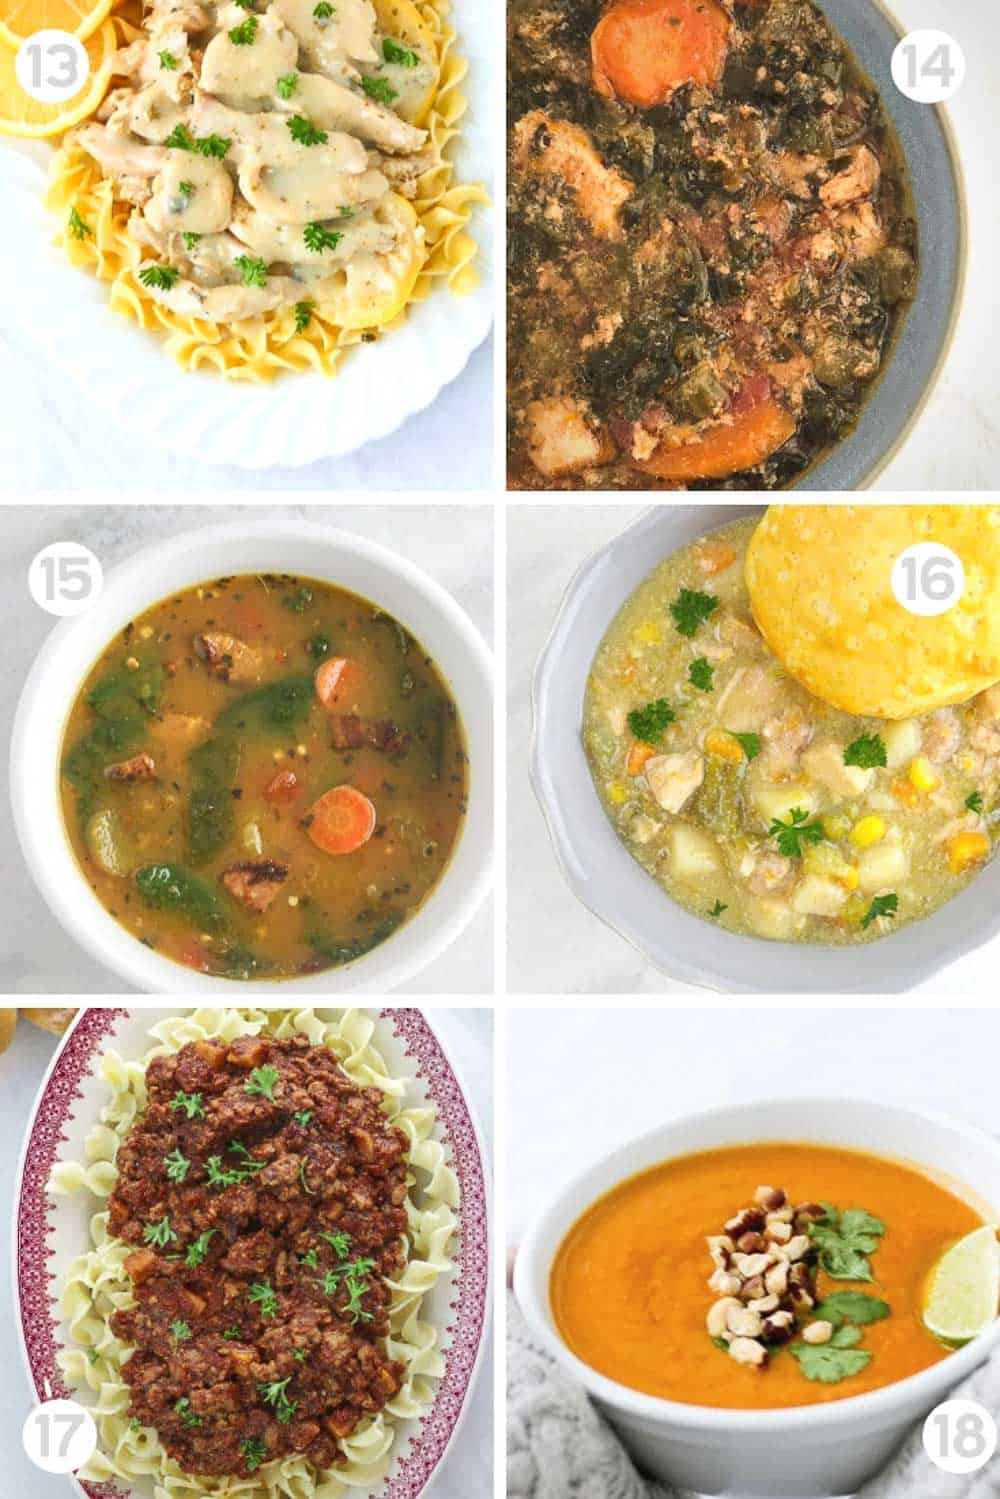 6 Different Healthy freezer crockpot meals numbered 13-18